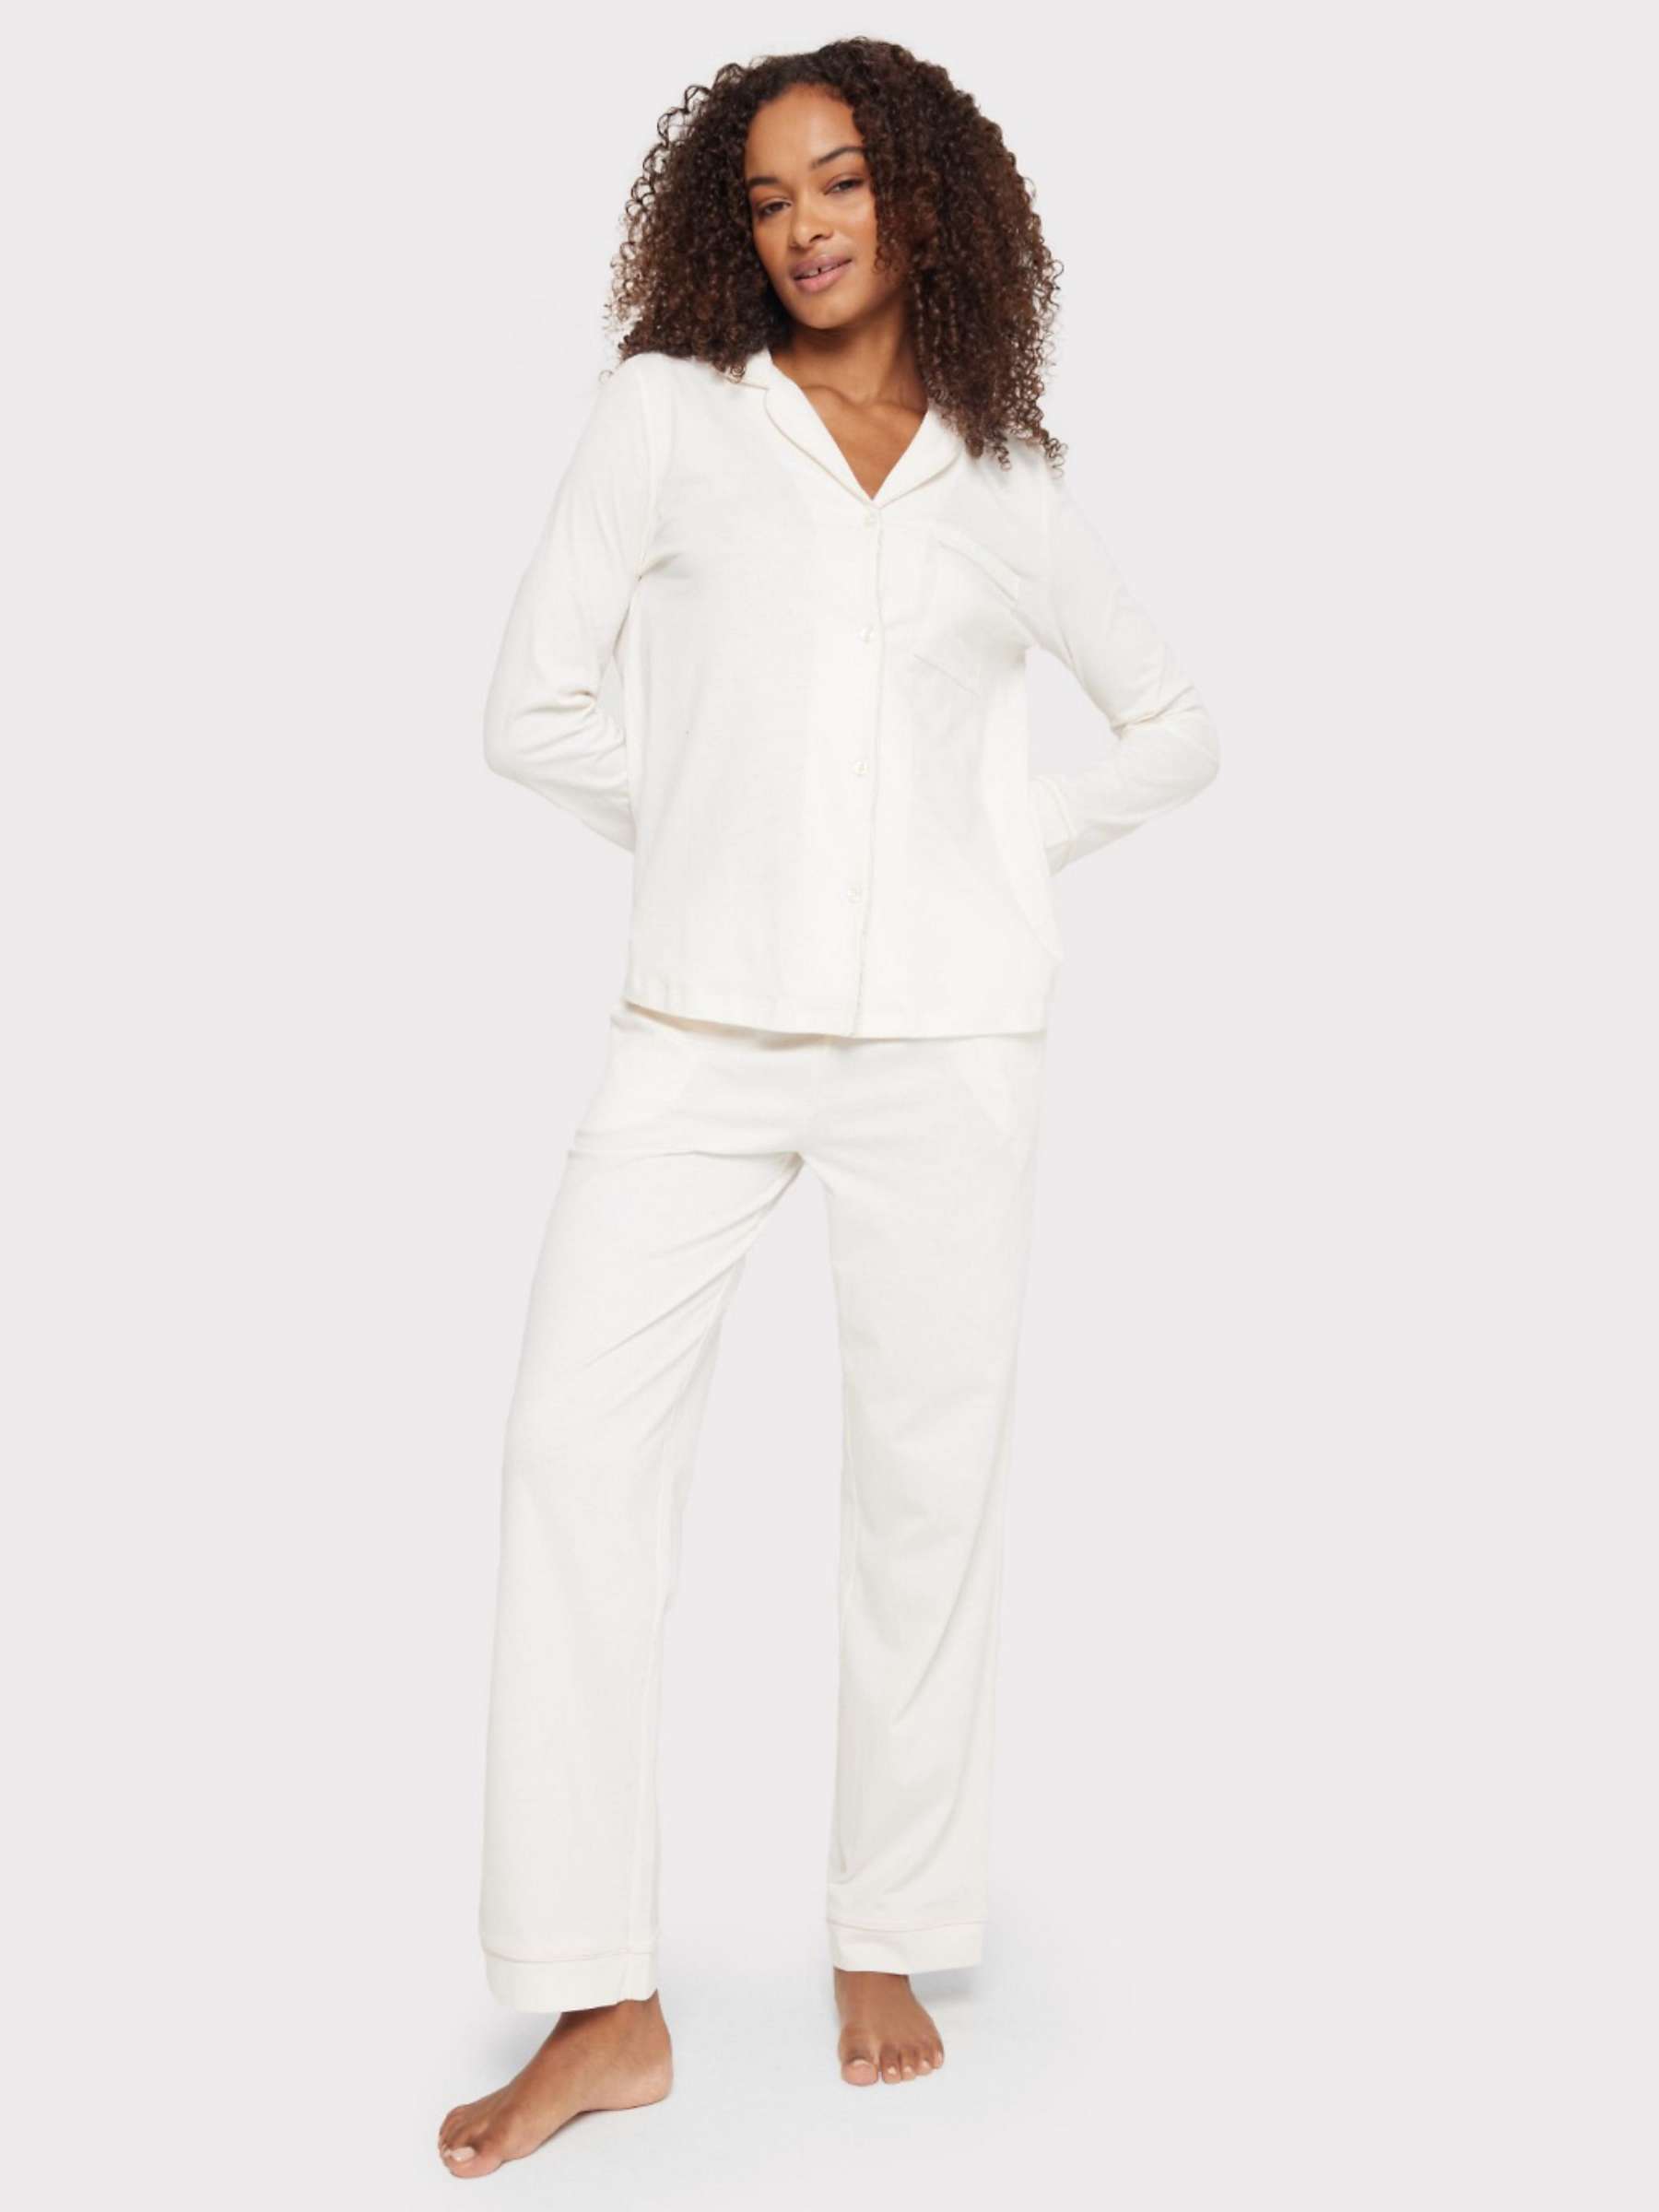 Buy Chelsea Peers Organic Cotton Pyjama Set Online at johnlewis.com